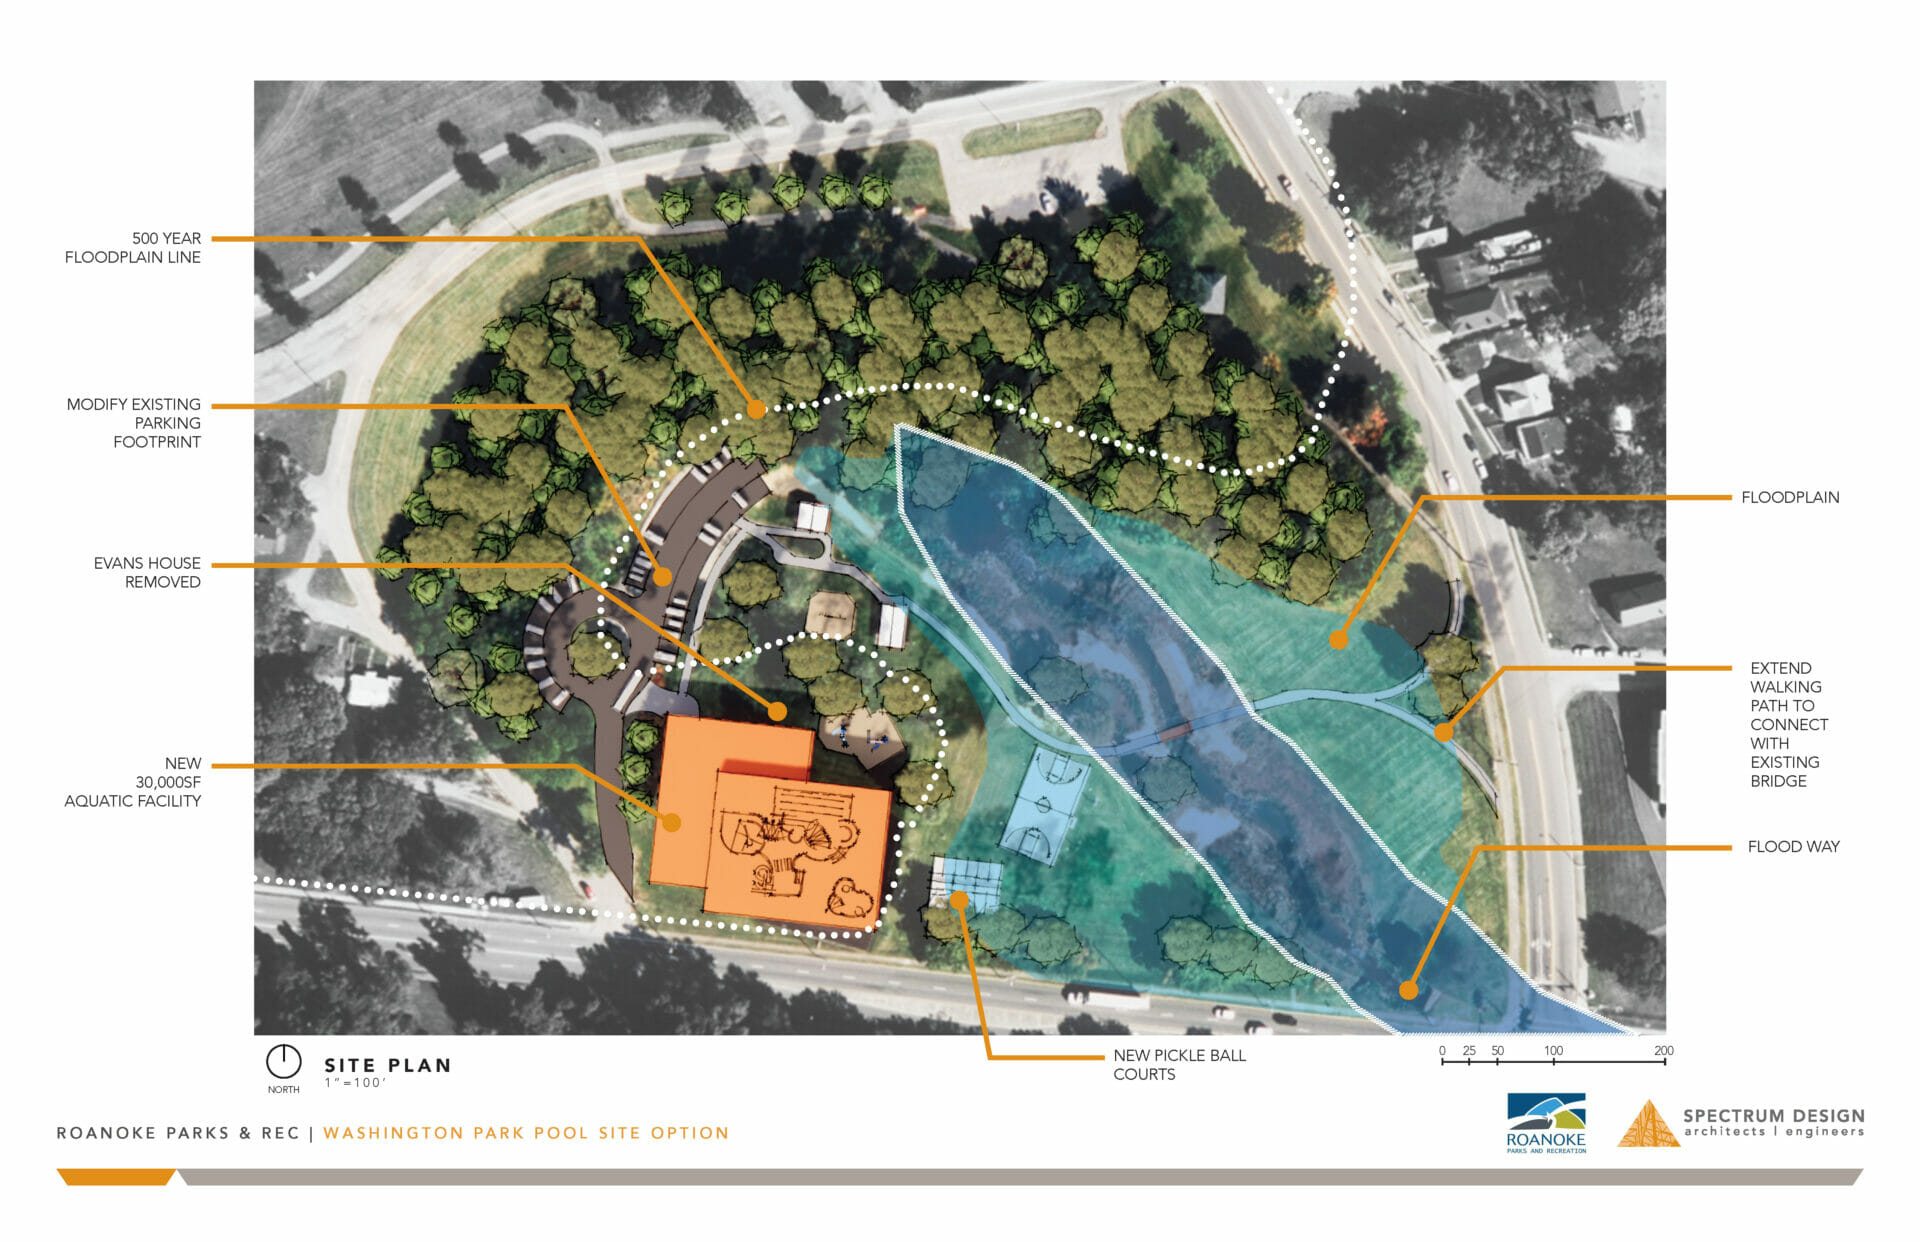 Washington Park Pool Site Study Option (1)